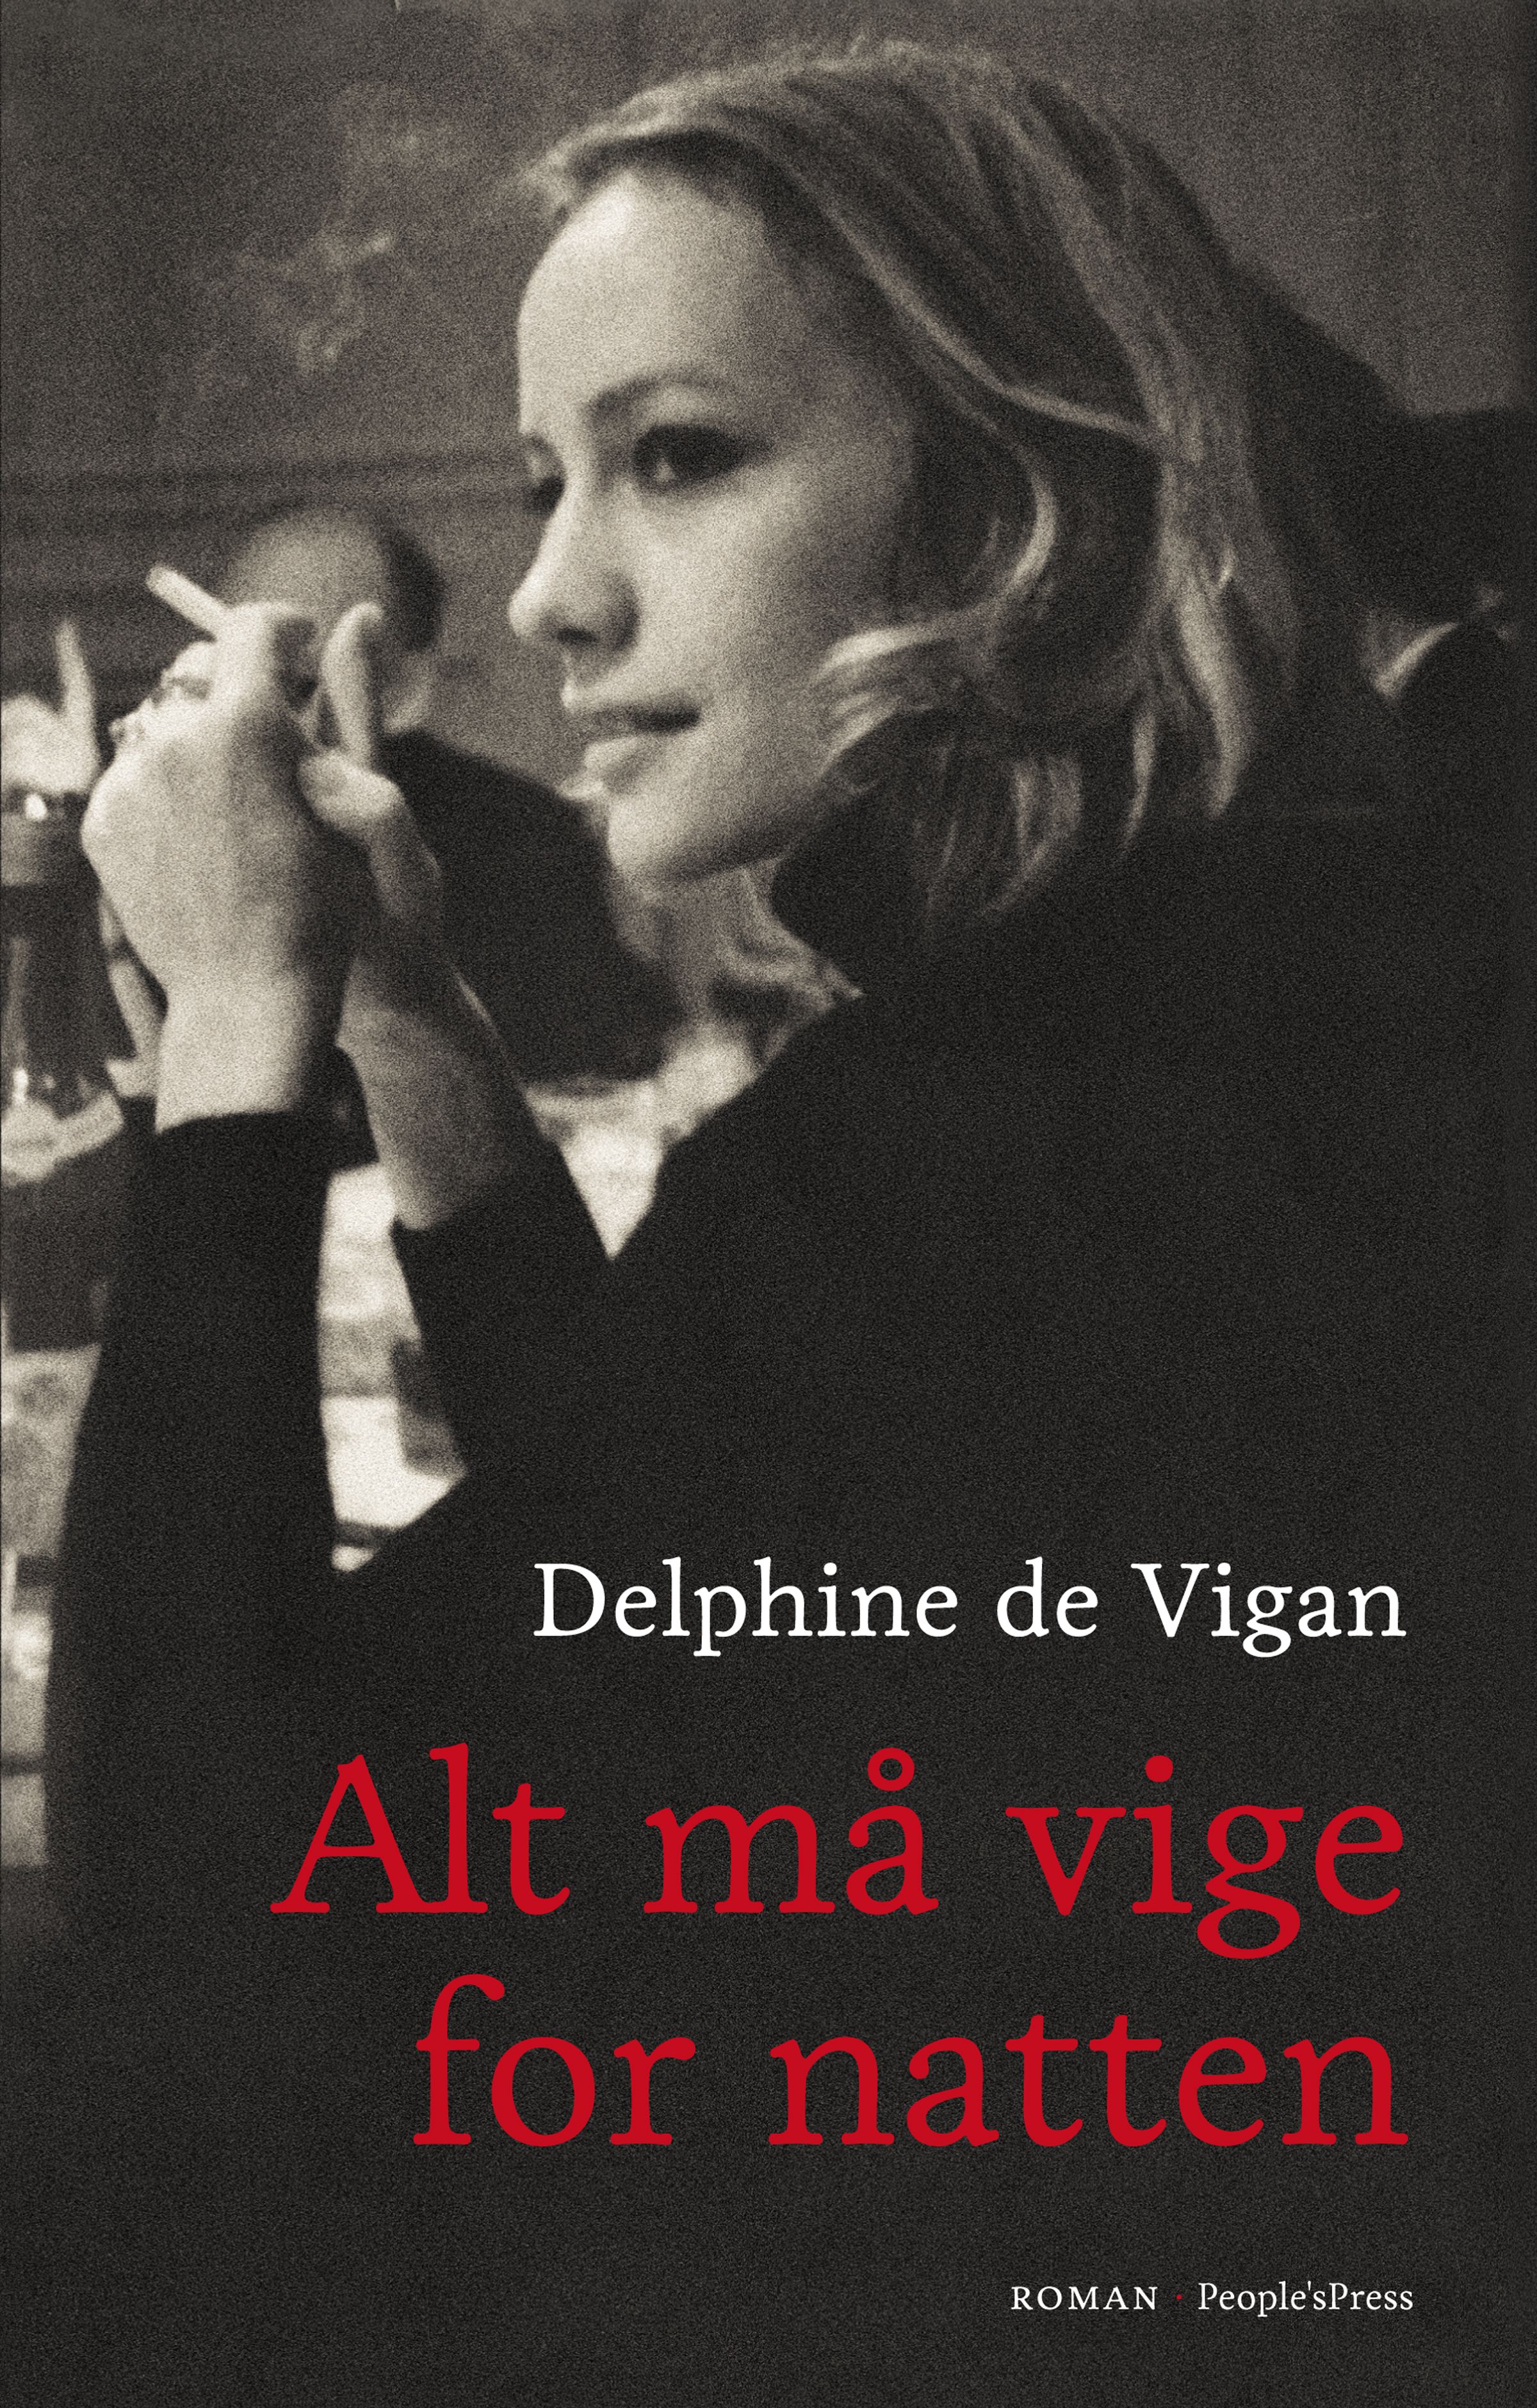 Alt må vige for natten, eBook by Delphine De Vigan